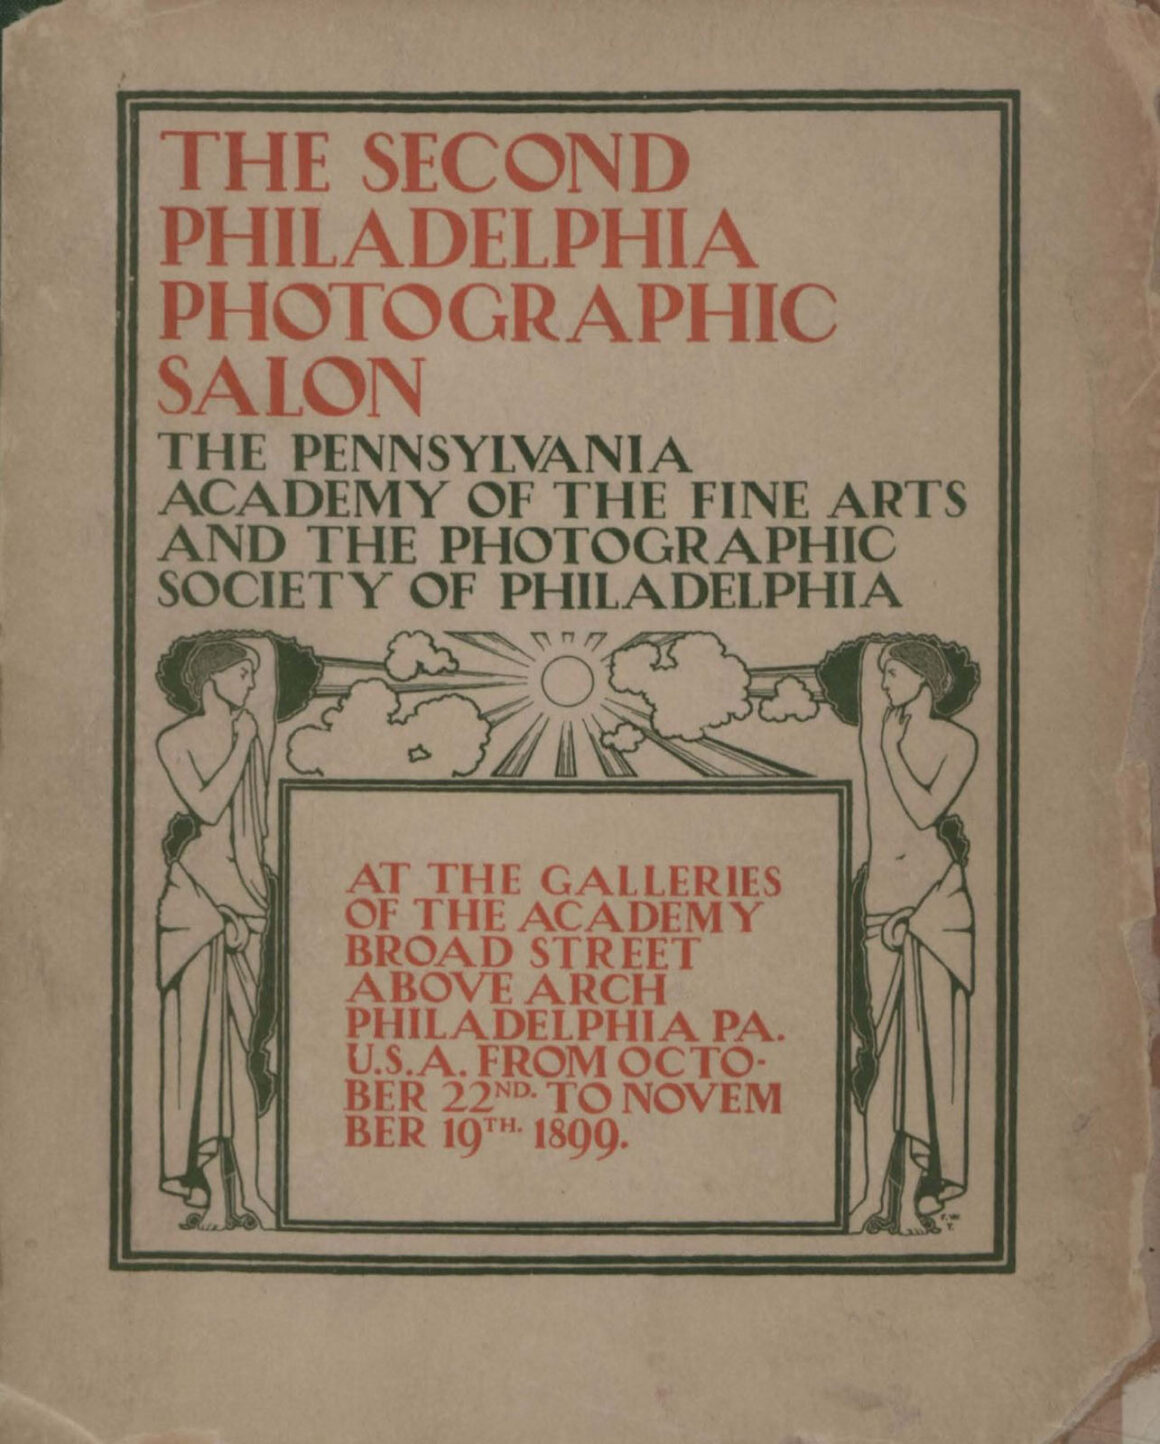 cover of philadelphia salon catalog